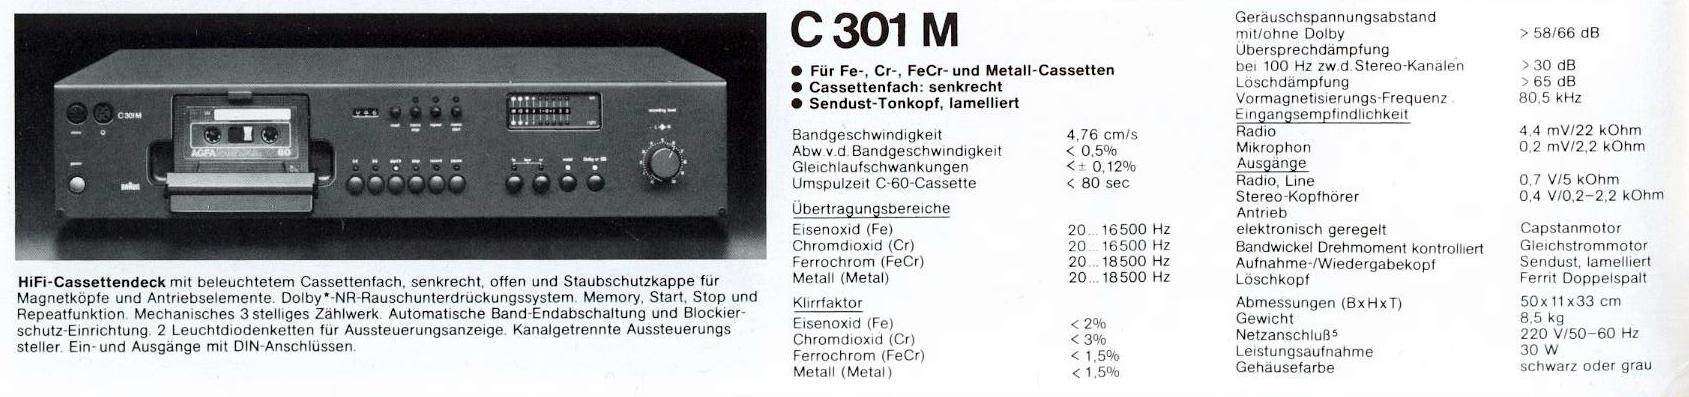 Braun C-301 M-Prospekt-1.jpg